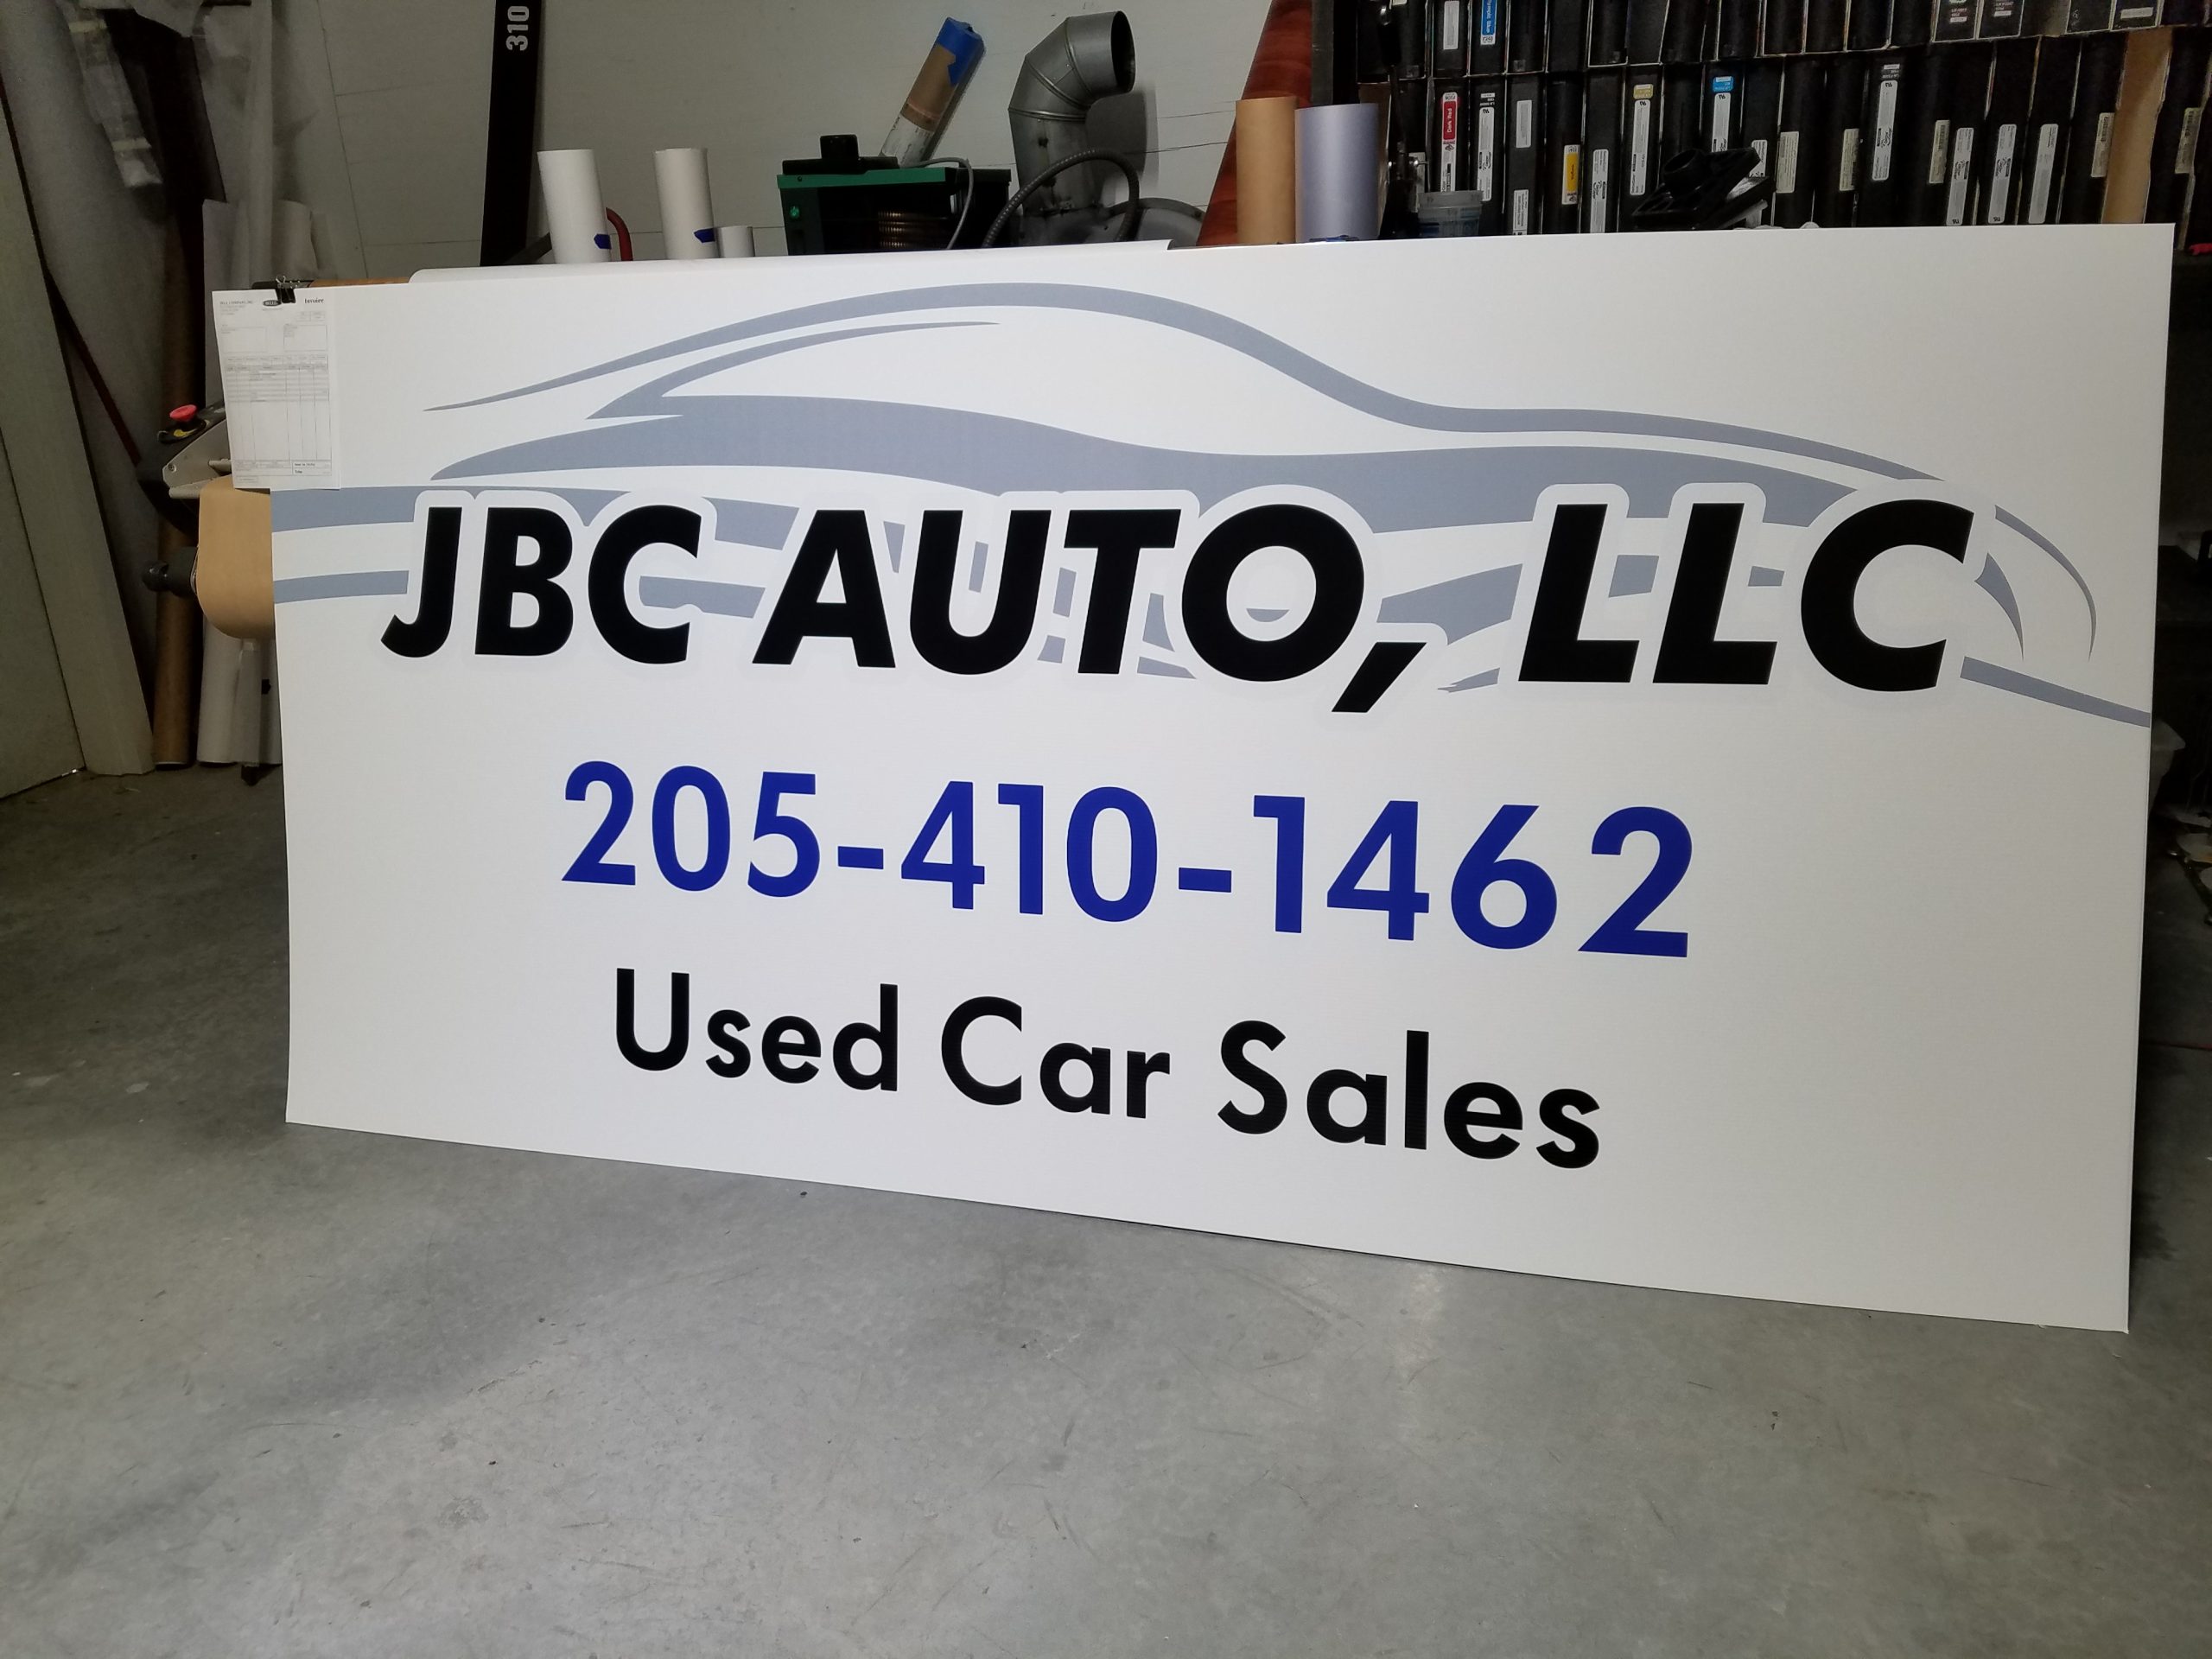 JBC AUTO LLC sign